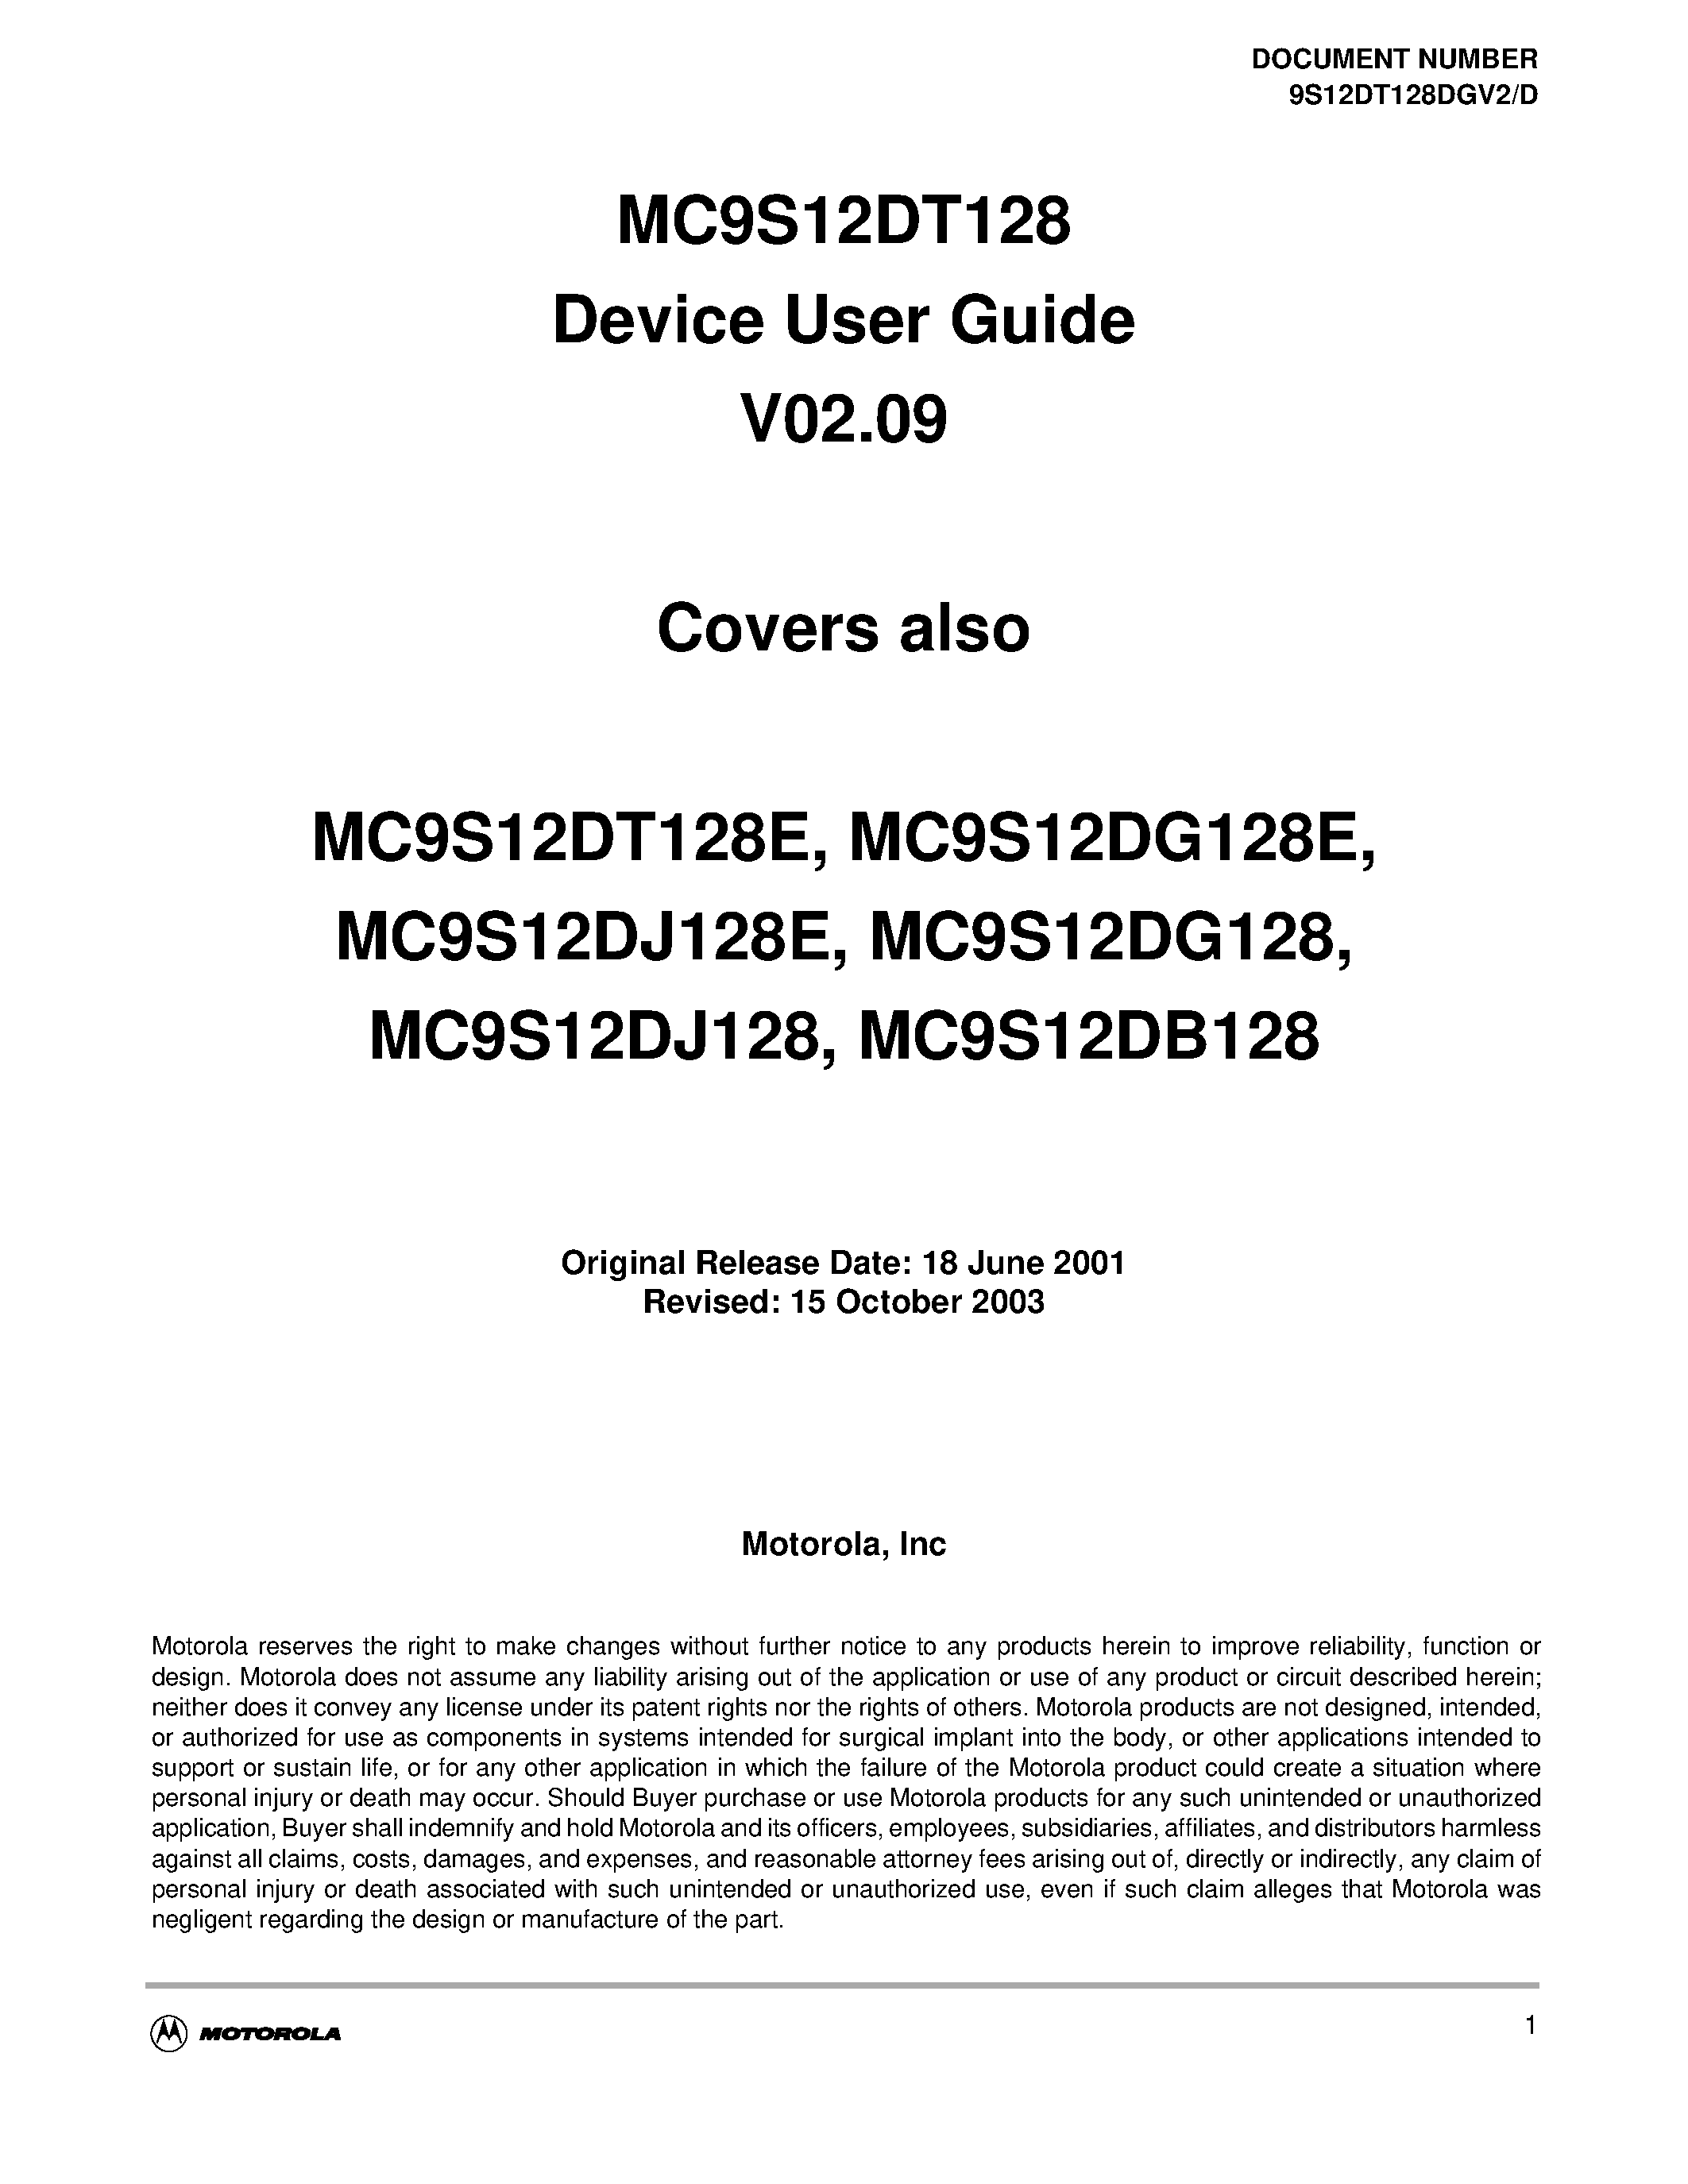 Даташит S12VREGV1 - MC9S12DT128 Device User Guide V02.09 страница 1